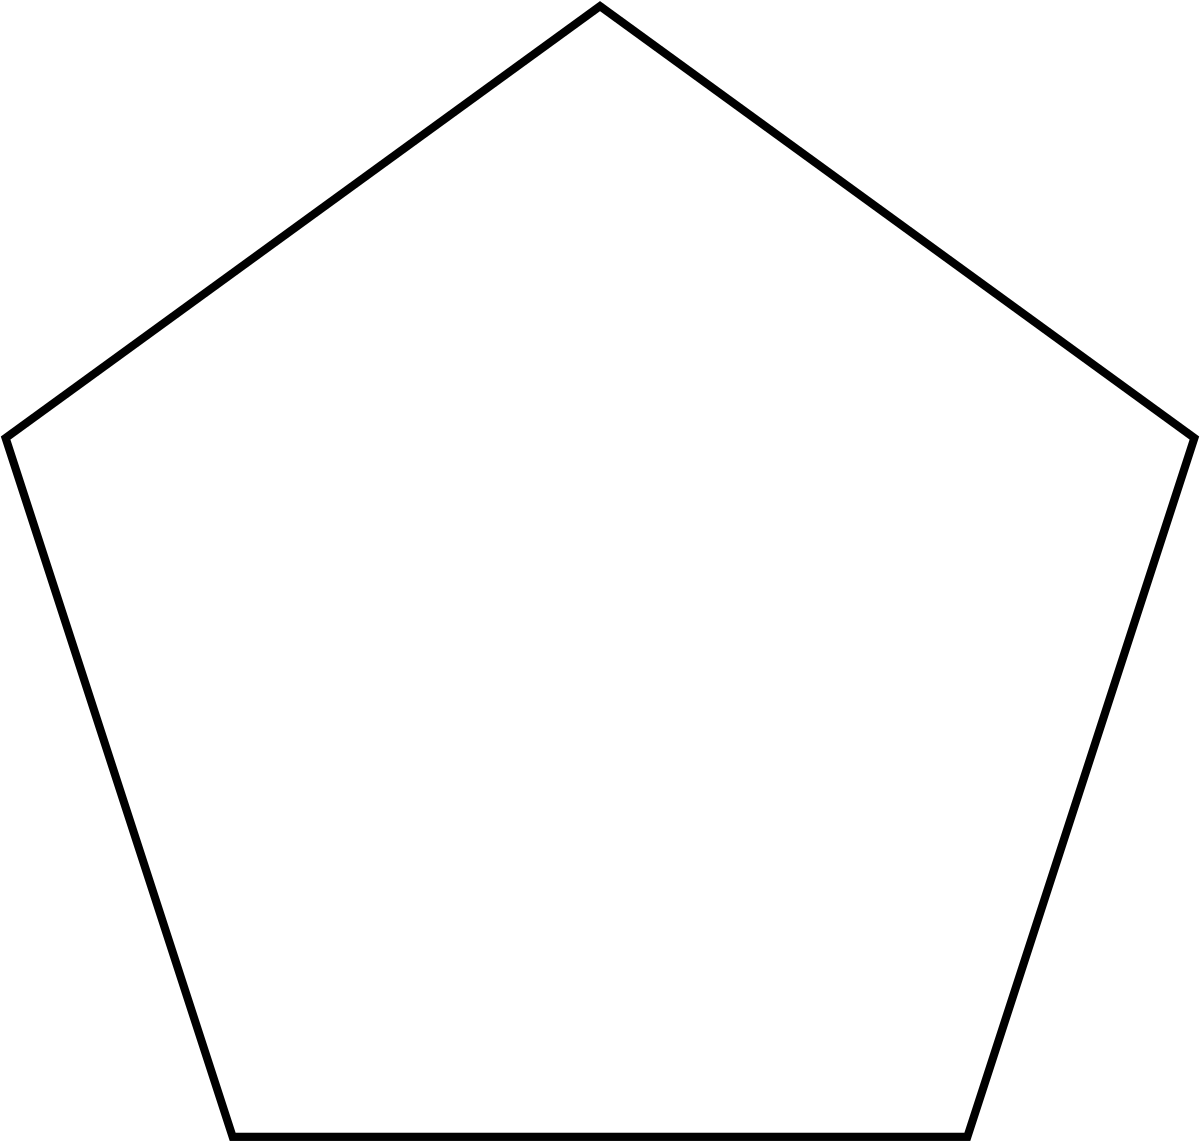 convex polygon definition geometry